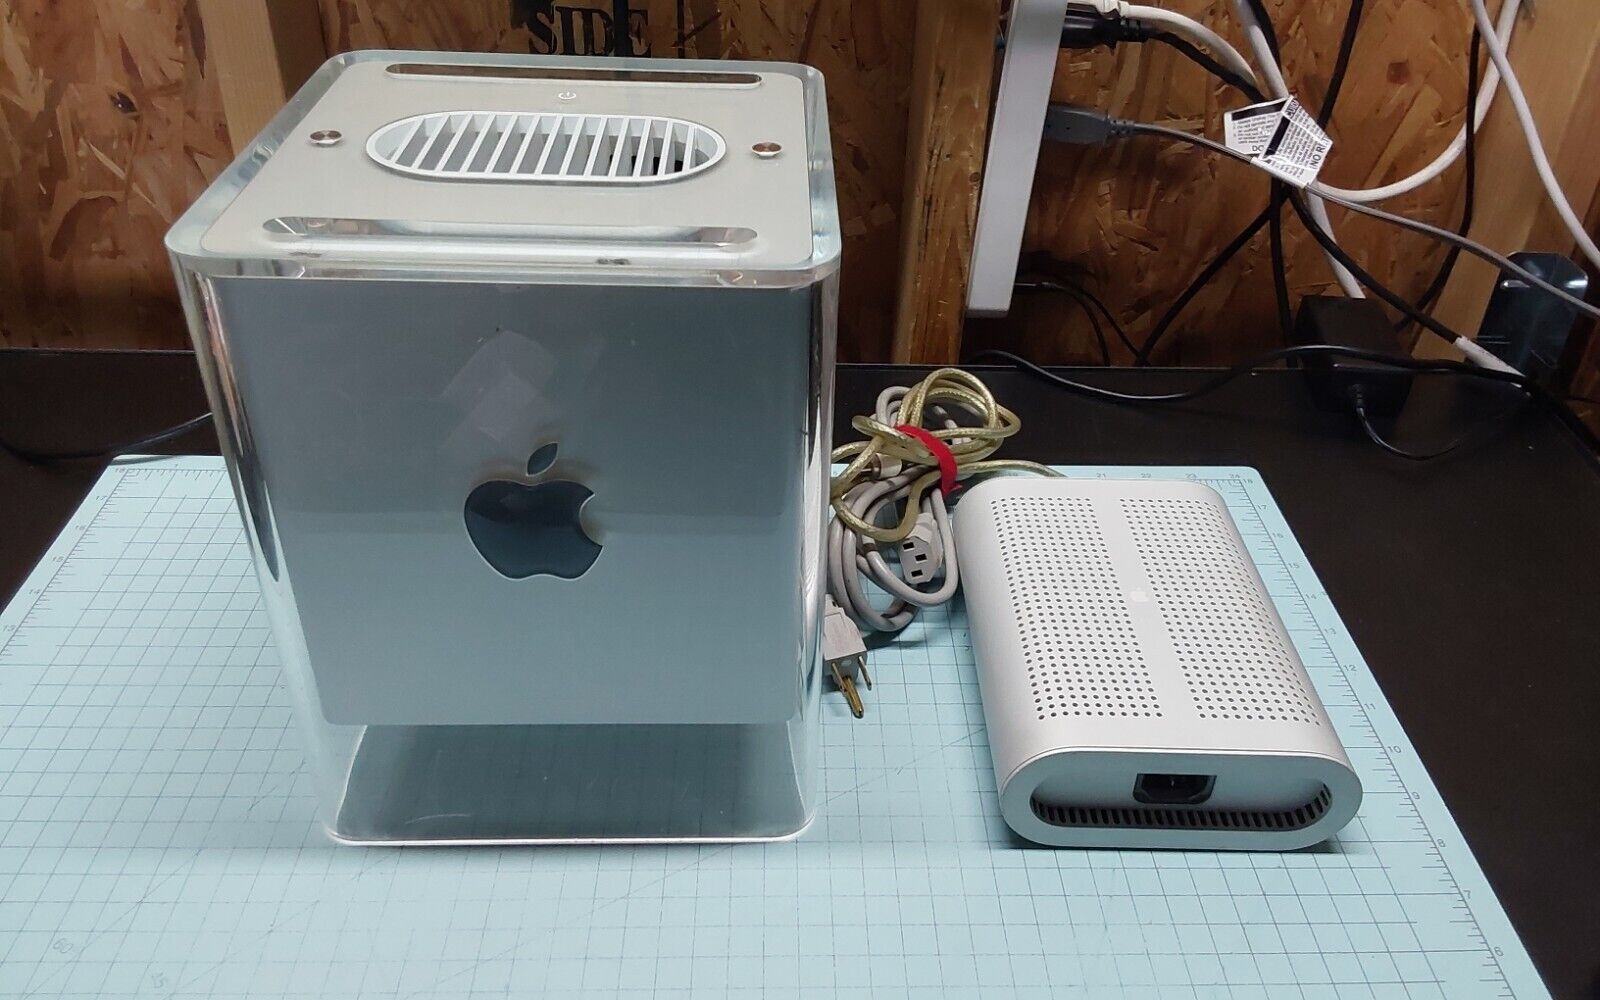 Apple Power Mac G4 Cube 450 MHz PowerPC 7400 CPU 512MB RAM No HDD + OS 9 Disc